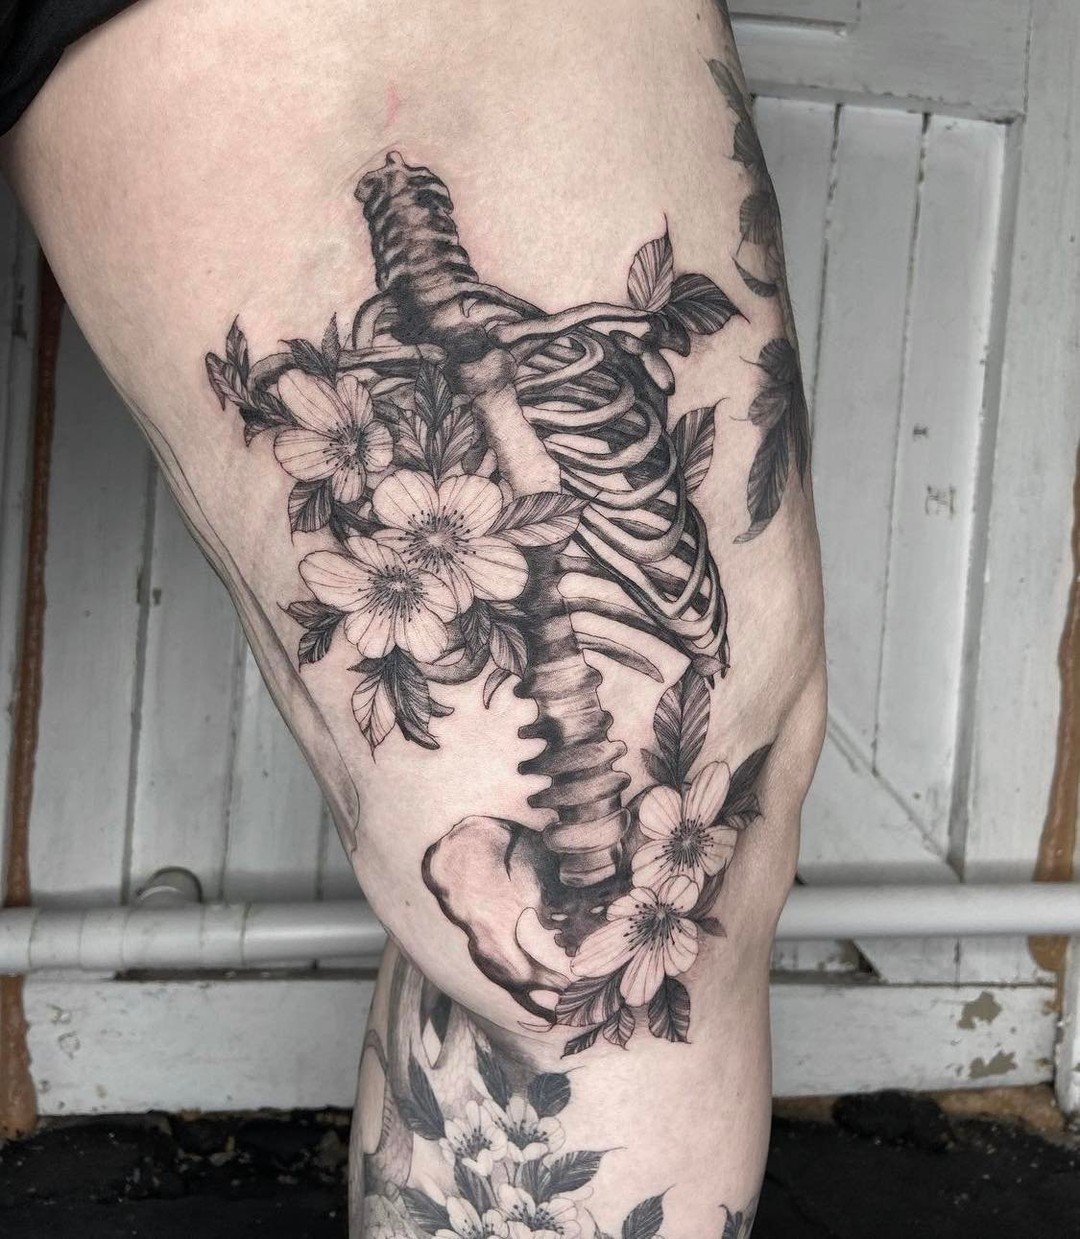 Leg Flower Tiger Thigh Tattoo by Dave Wah